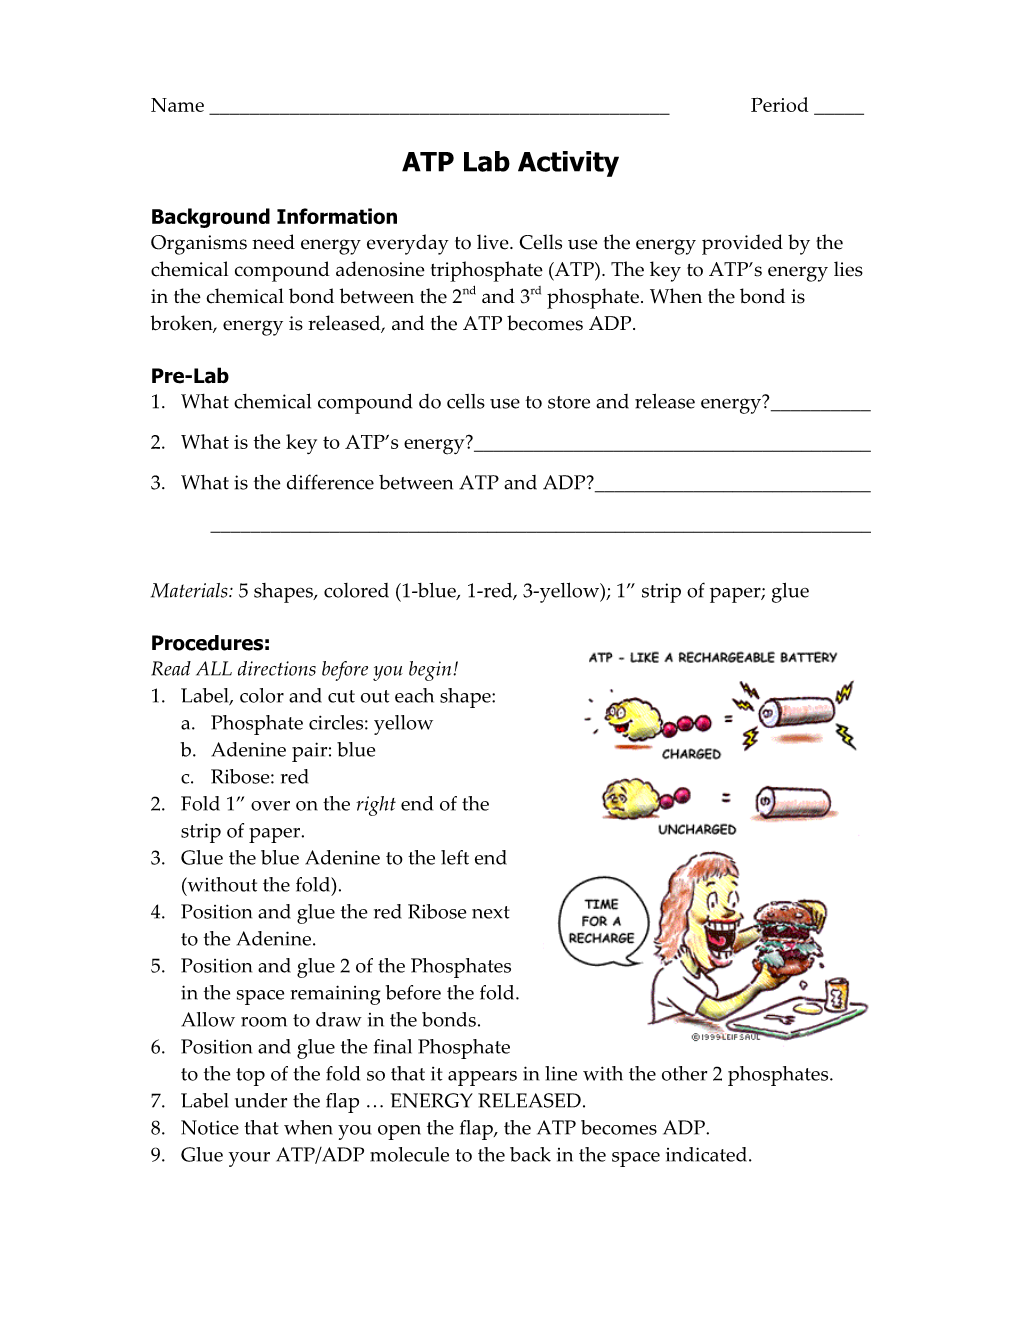 ATP Lab Activity